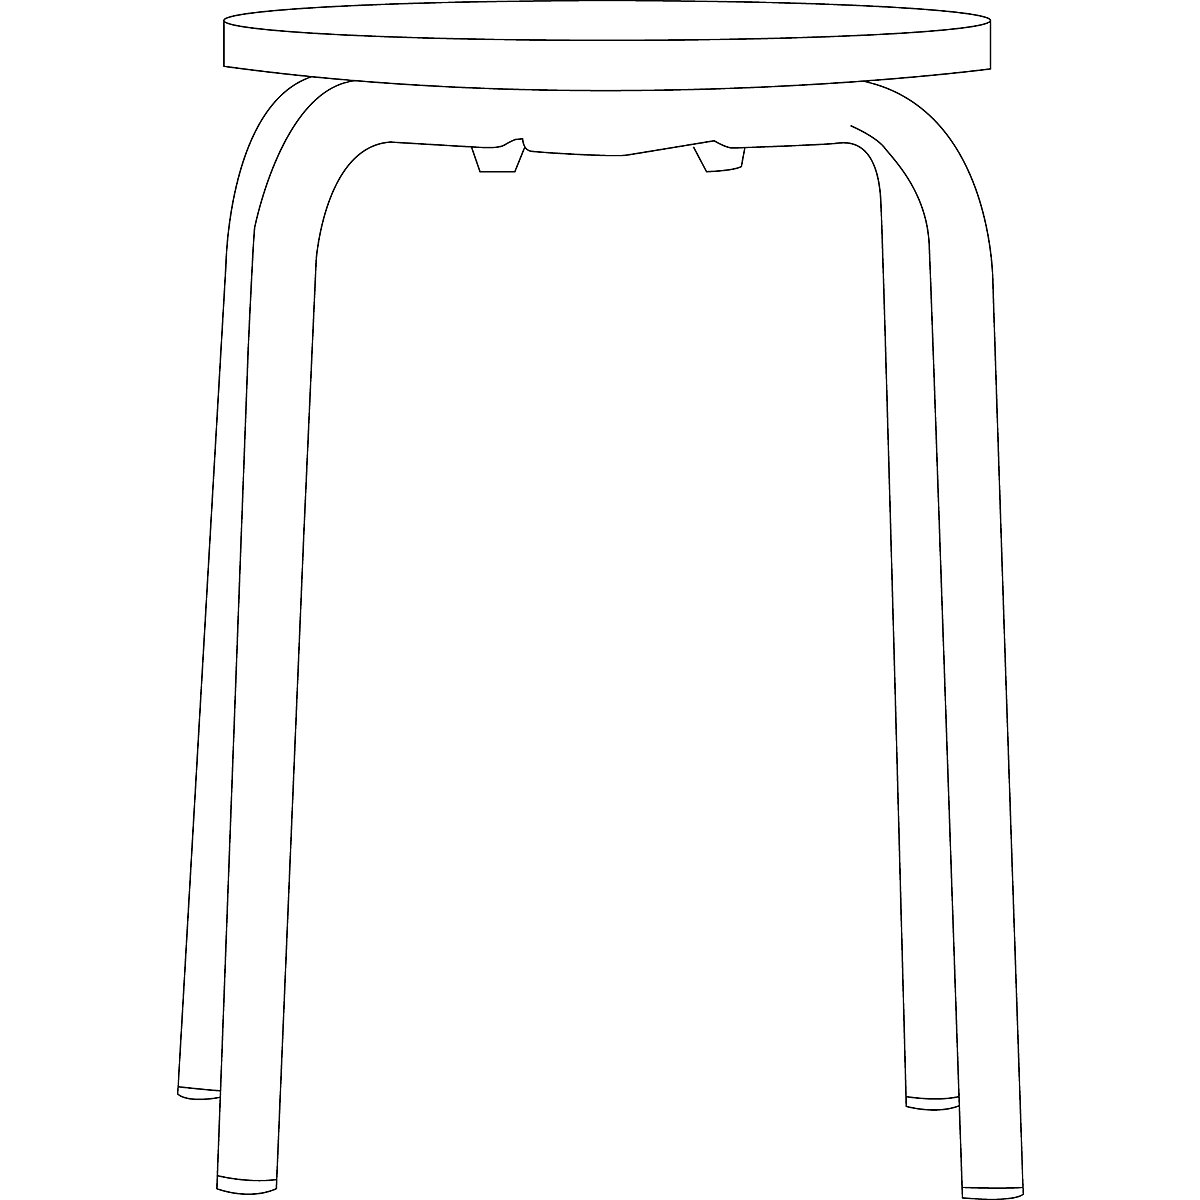 PARIS stool (Product illustration 4)-3